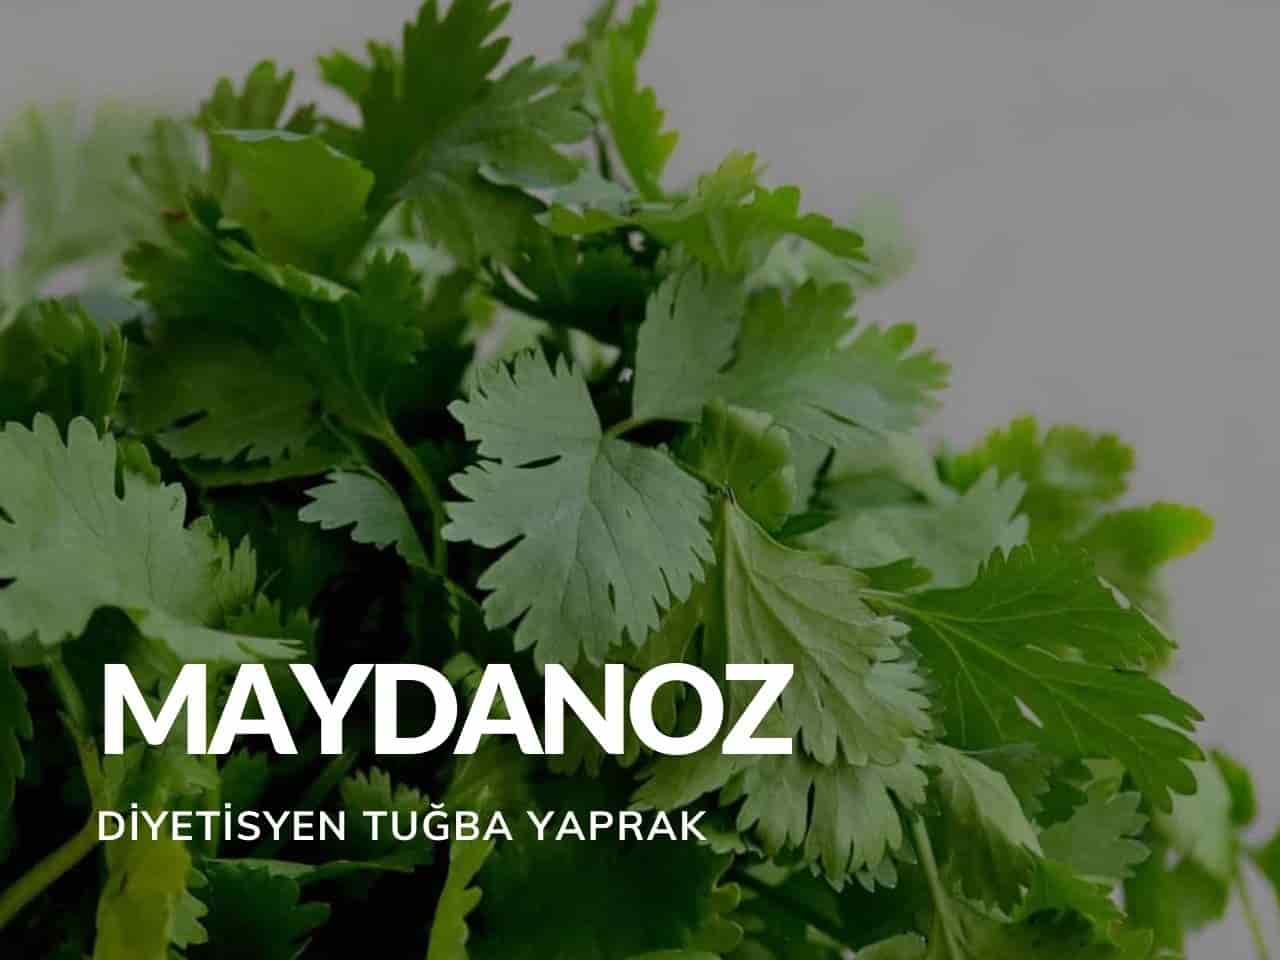 Maydanoz